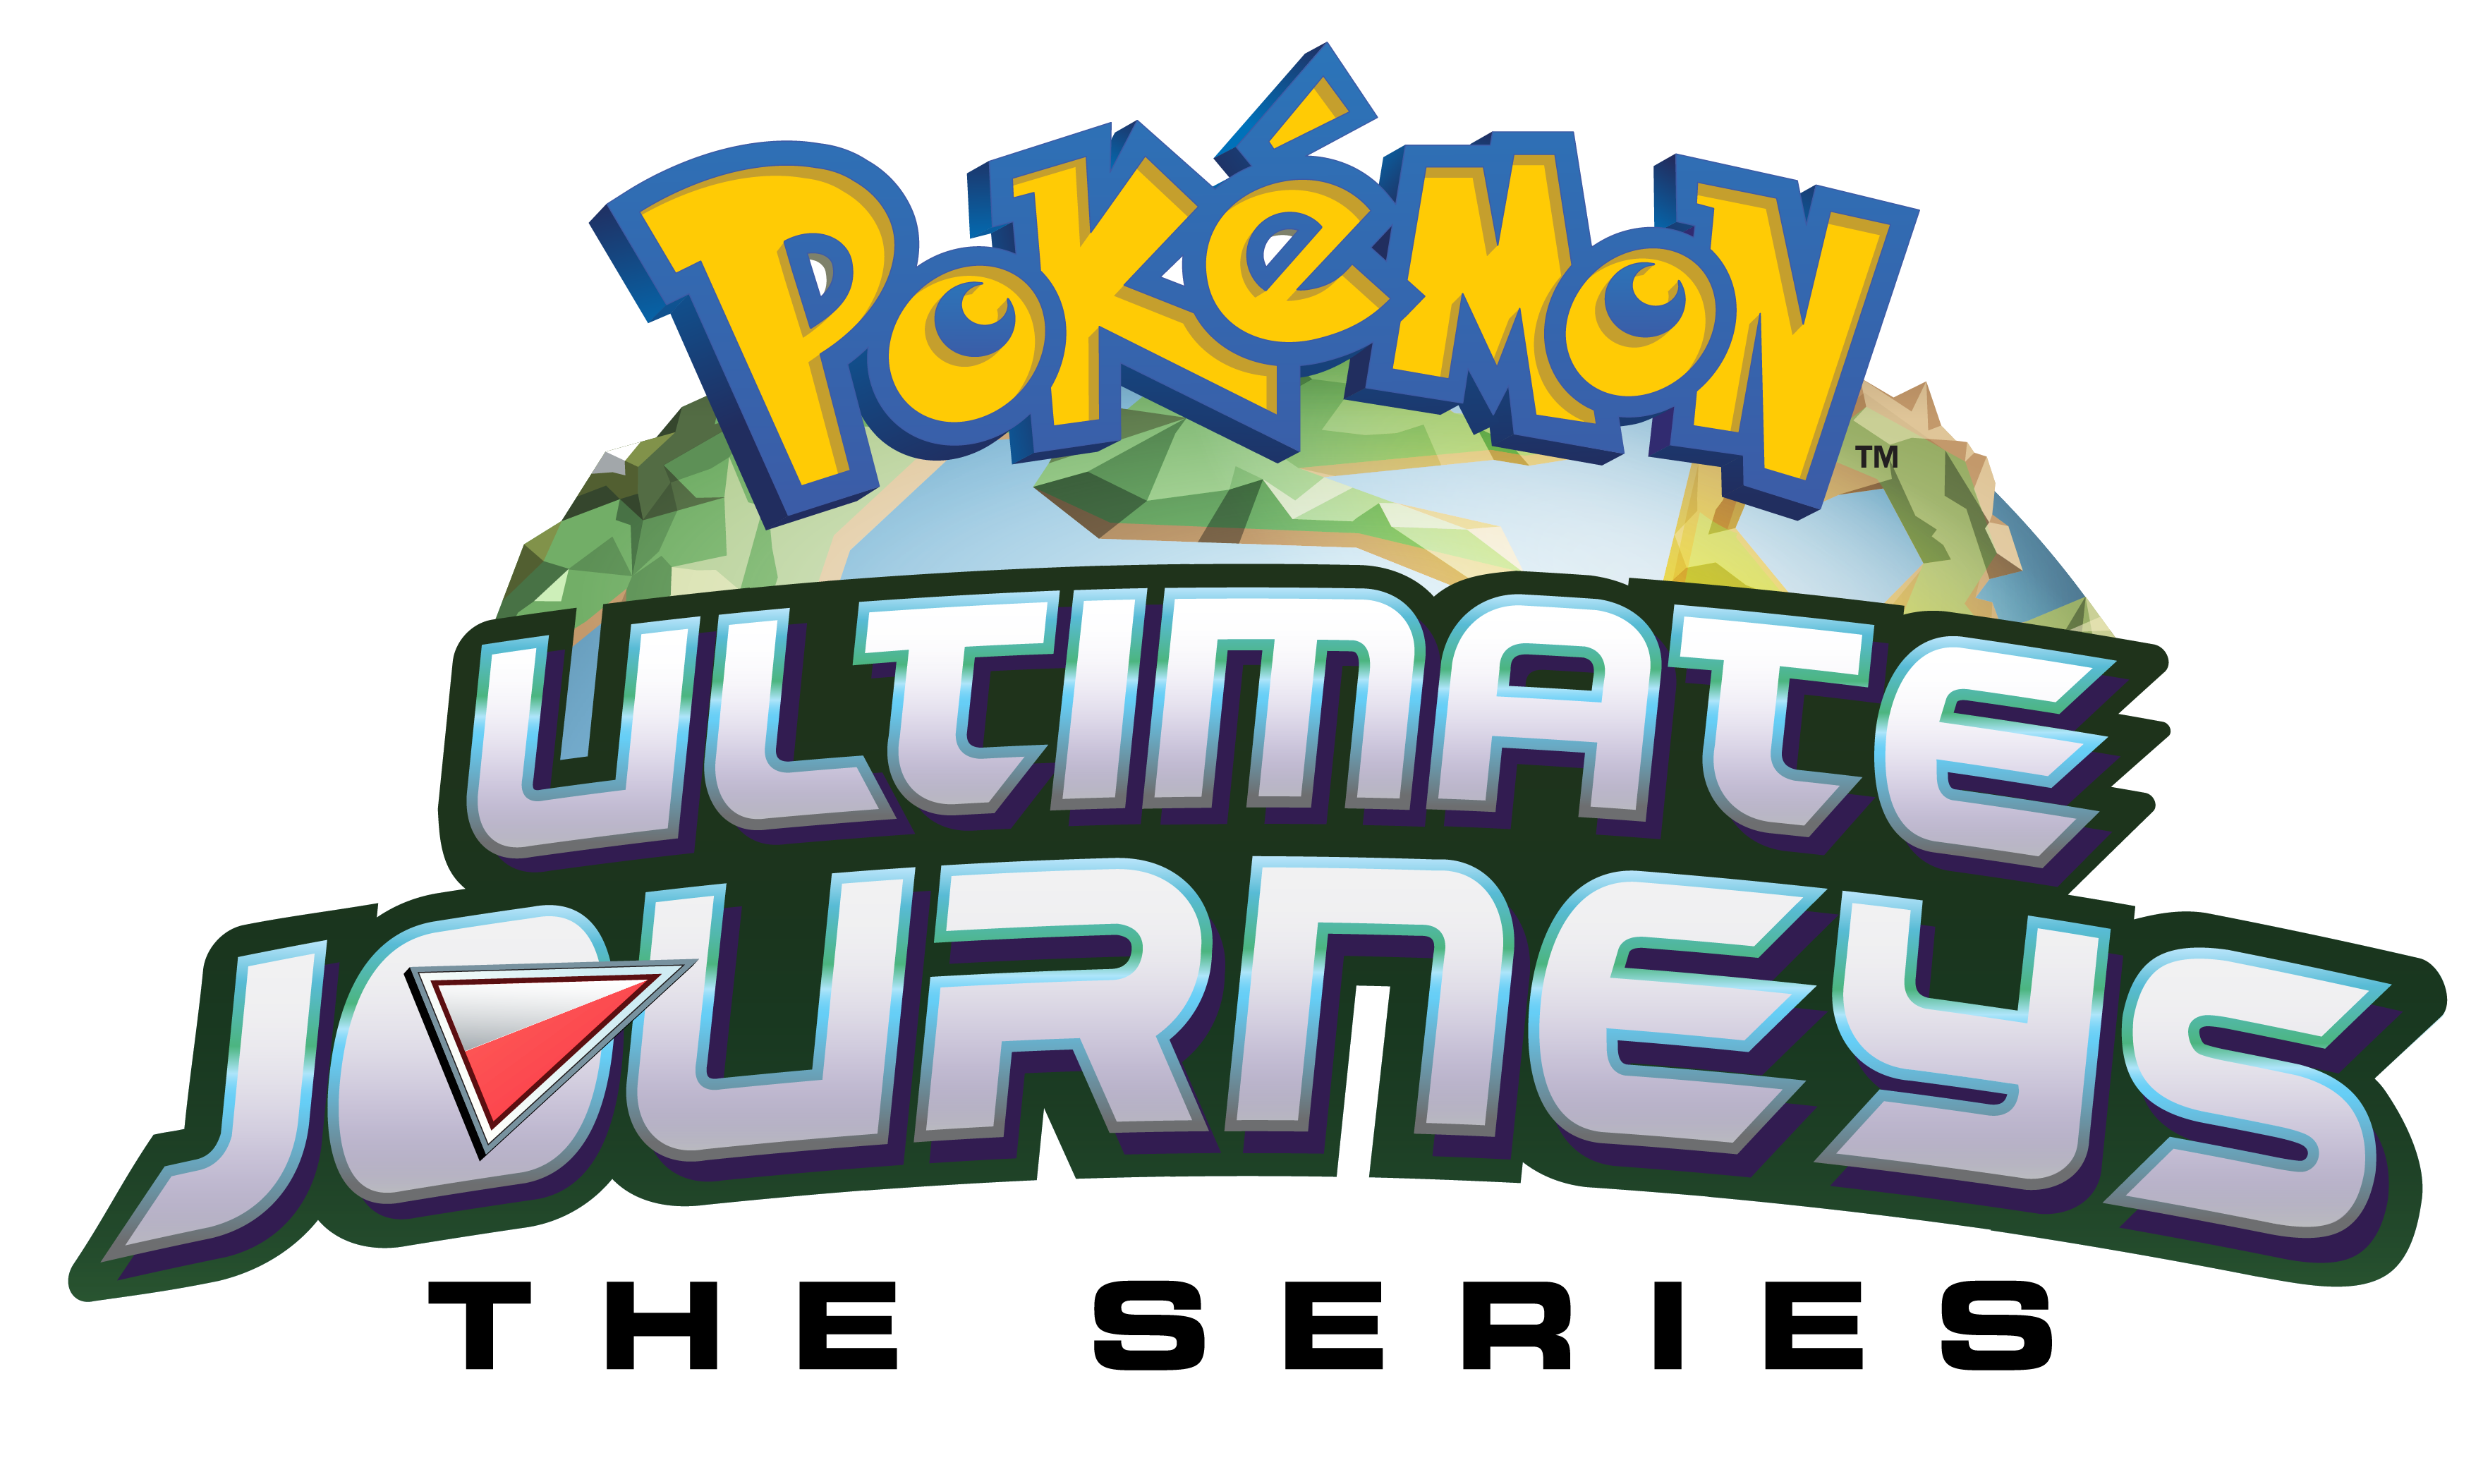 A New Season of Pokémon the Series